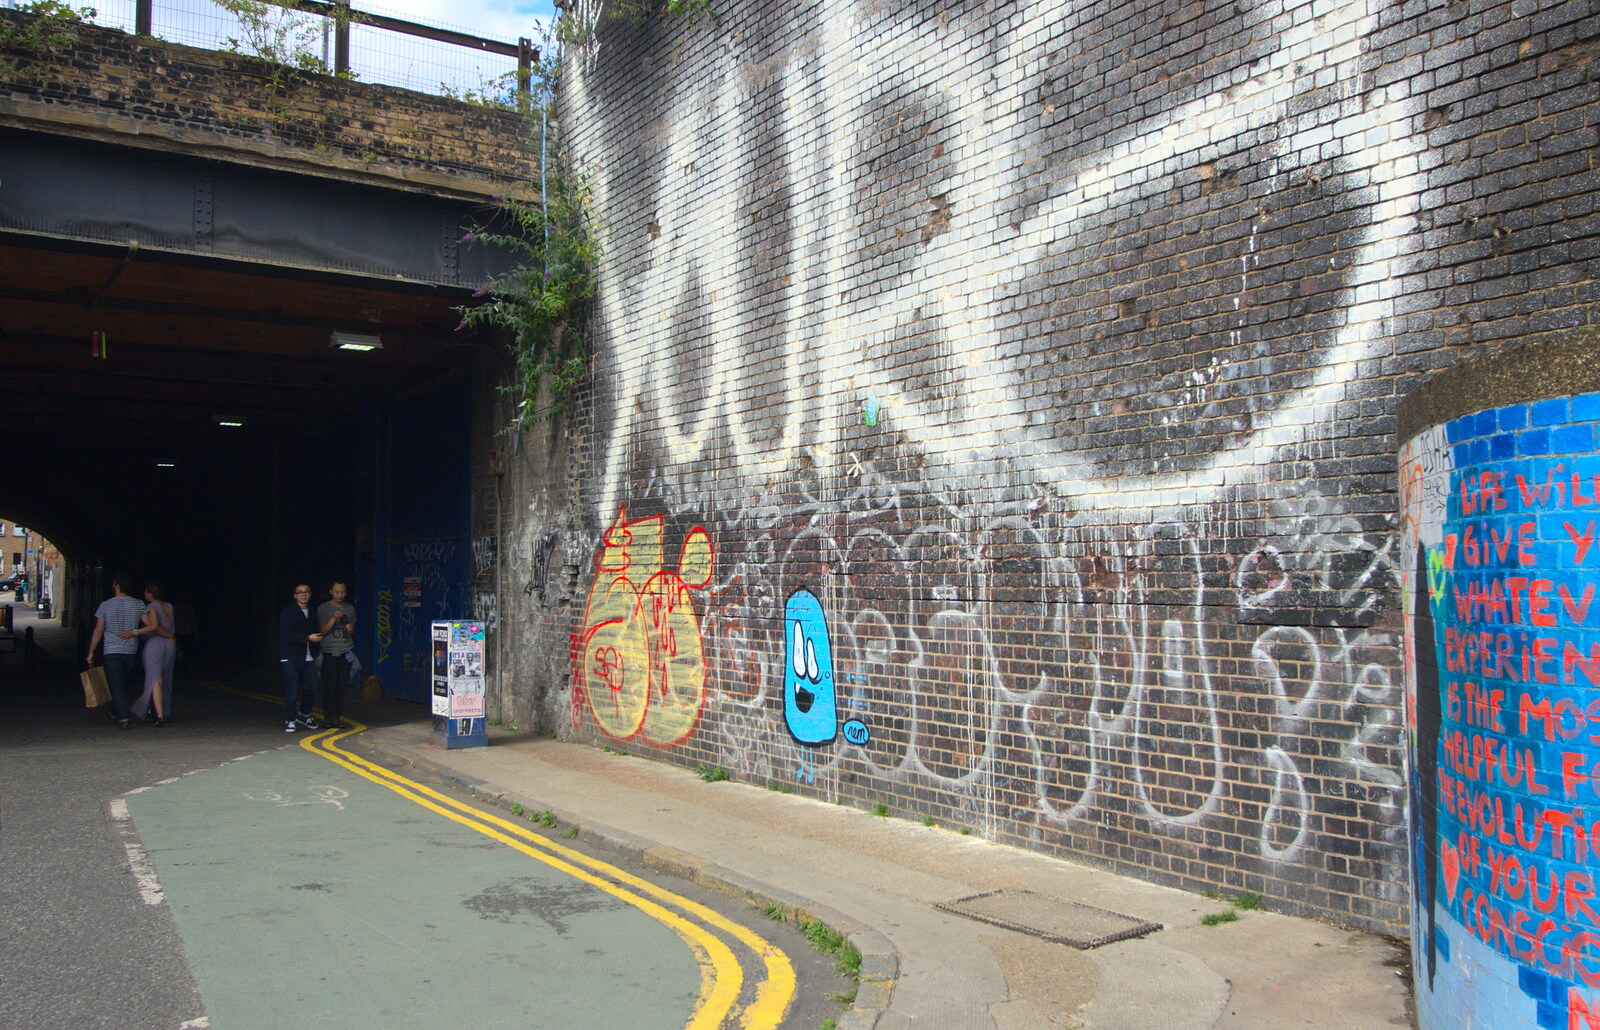 Massive graffiti writing from Spitalfields and Brick Lane Street Art, Whitechapel, London - 10th August 2013